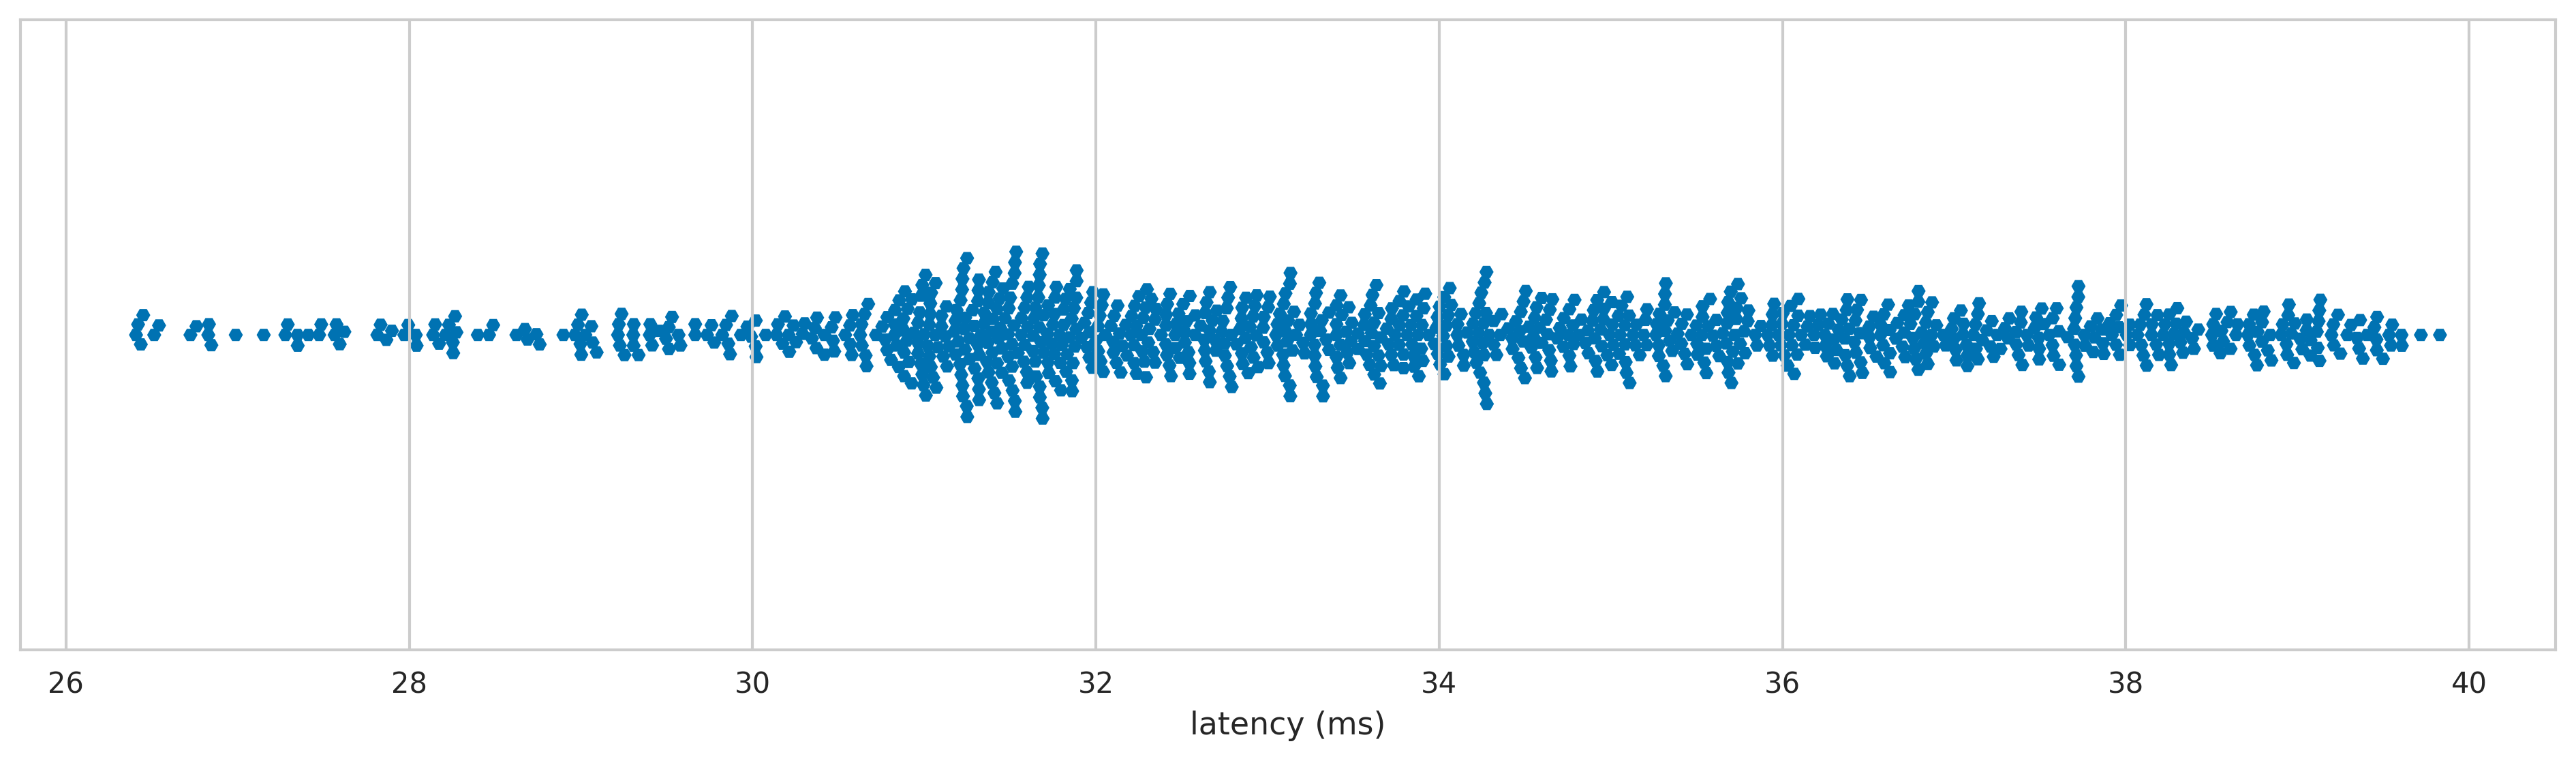 Microsoft Optical Mouse 200 latency distribution 